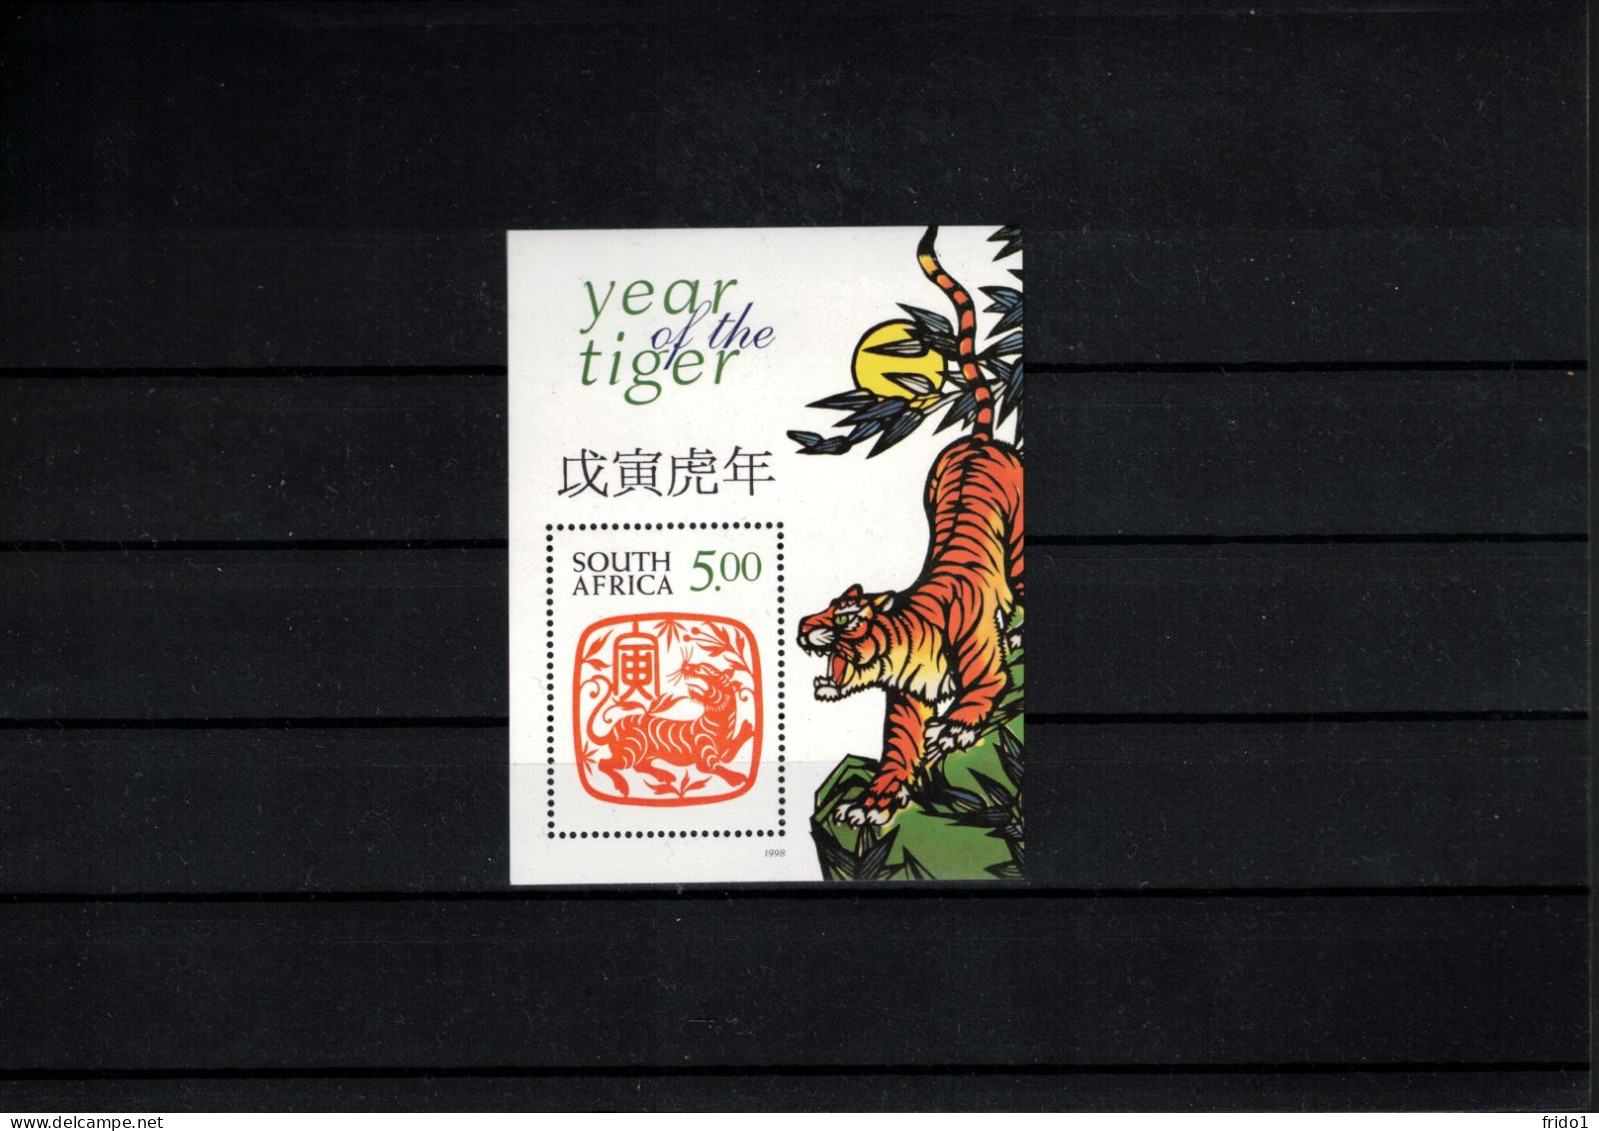 South Africa 1998 Year Of The Tiger Block Postfrisch / MNH - Chinees Nieuwjaar